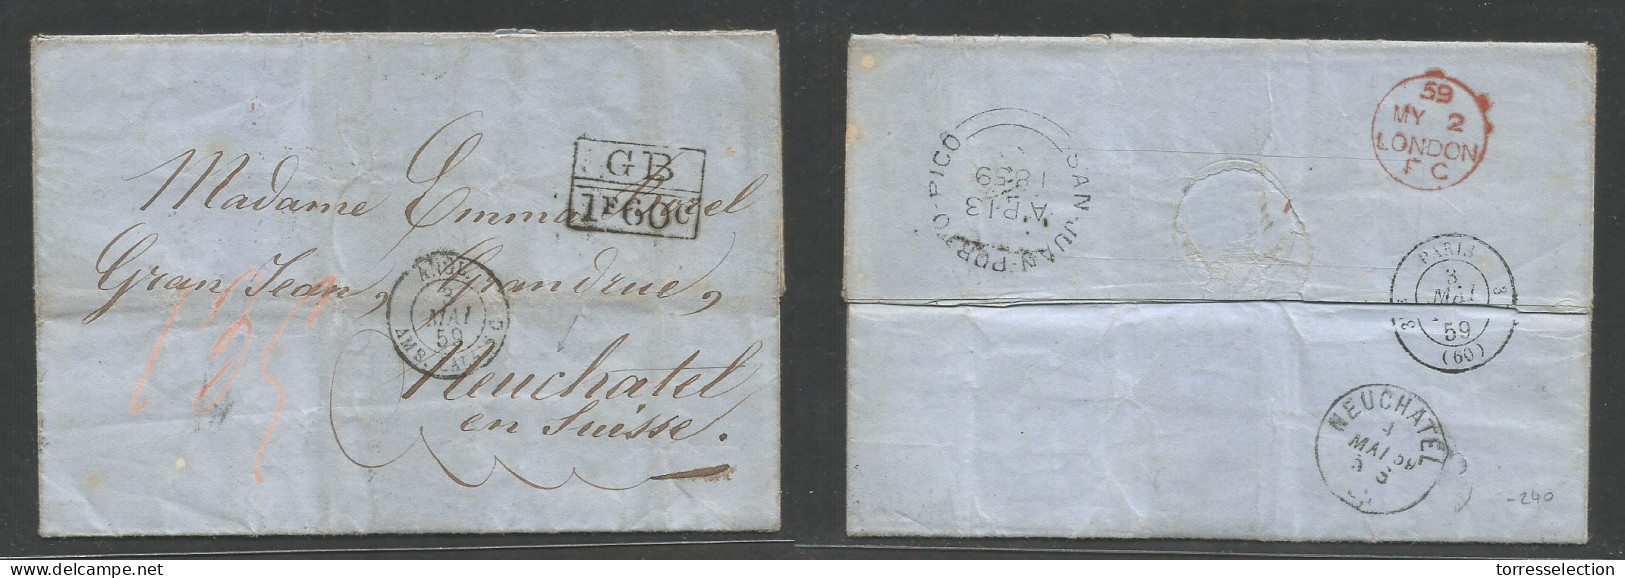 PUERTO RICO. 1859 (14 April) San Juan - Switzerland, Neuchatel (4 May) Via British Post Office S. Juan - London - Paris. - Puerto Rico